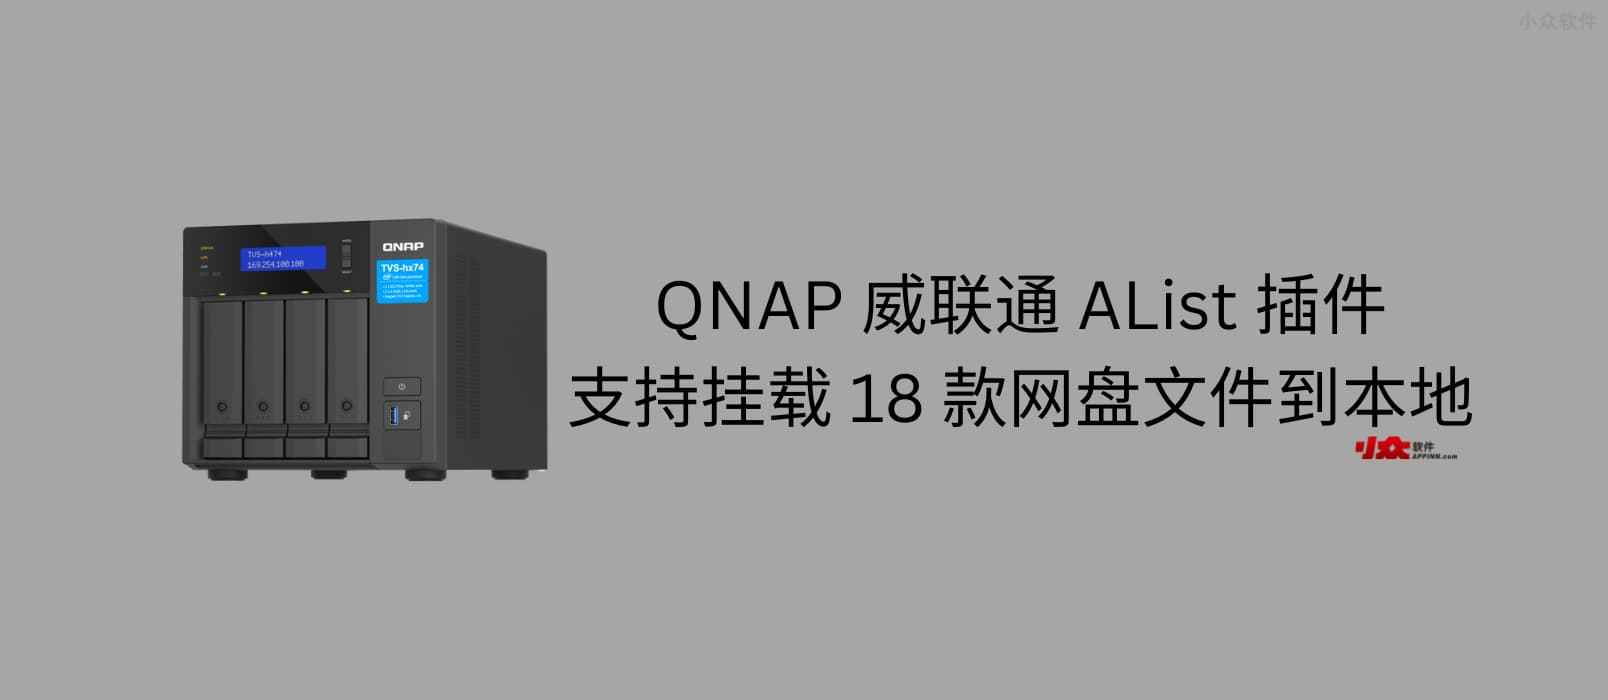 QNAP 威联通 AList 插件，支持挂载阿里云盘、百度云盘、PikPak、夸克网盘等到本地	